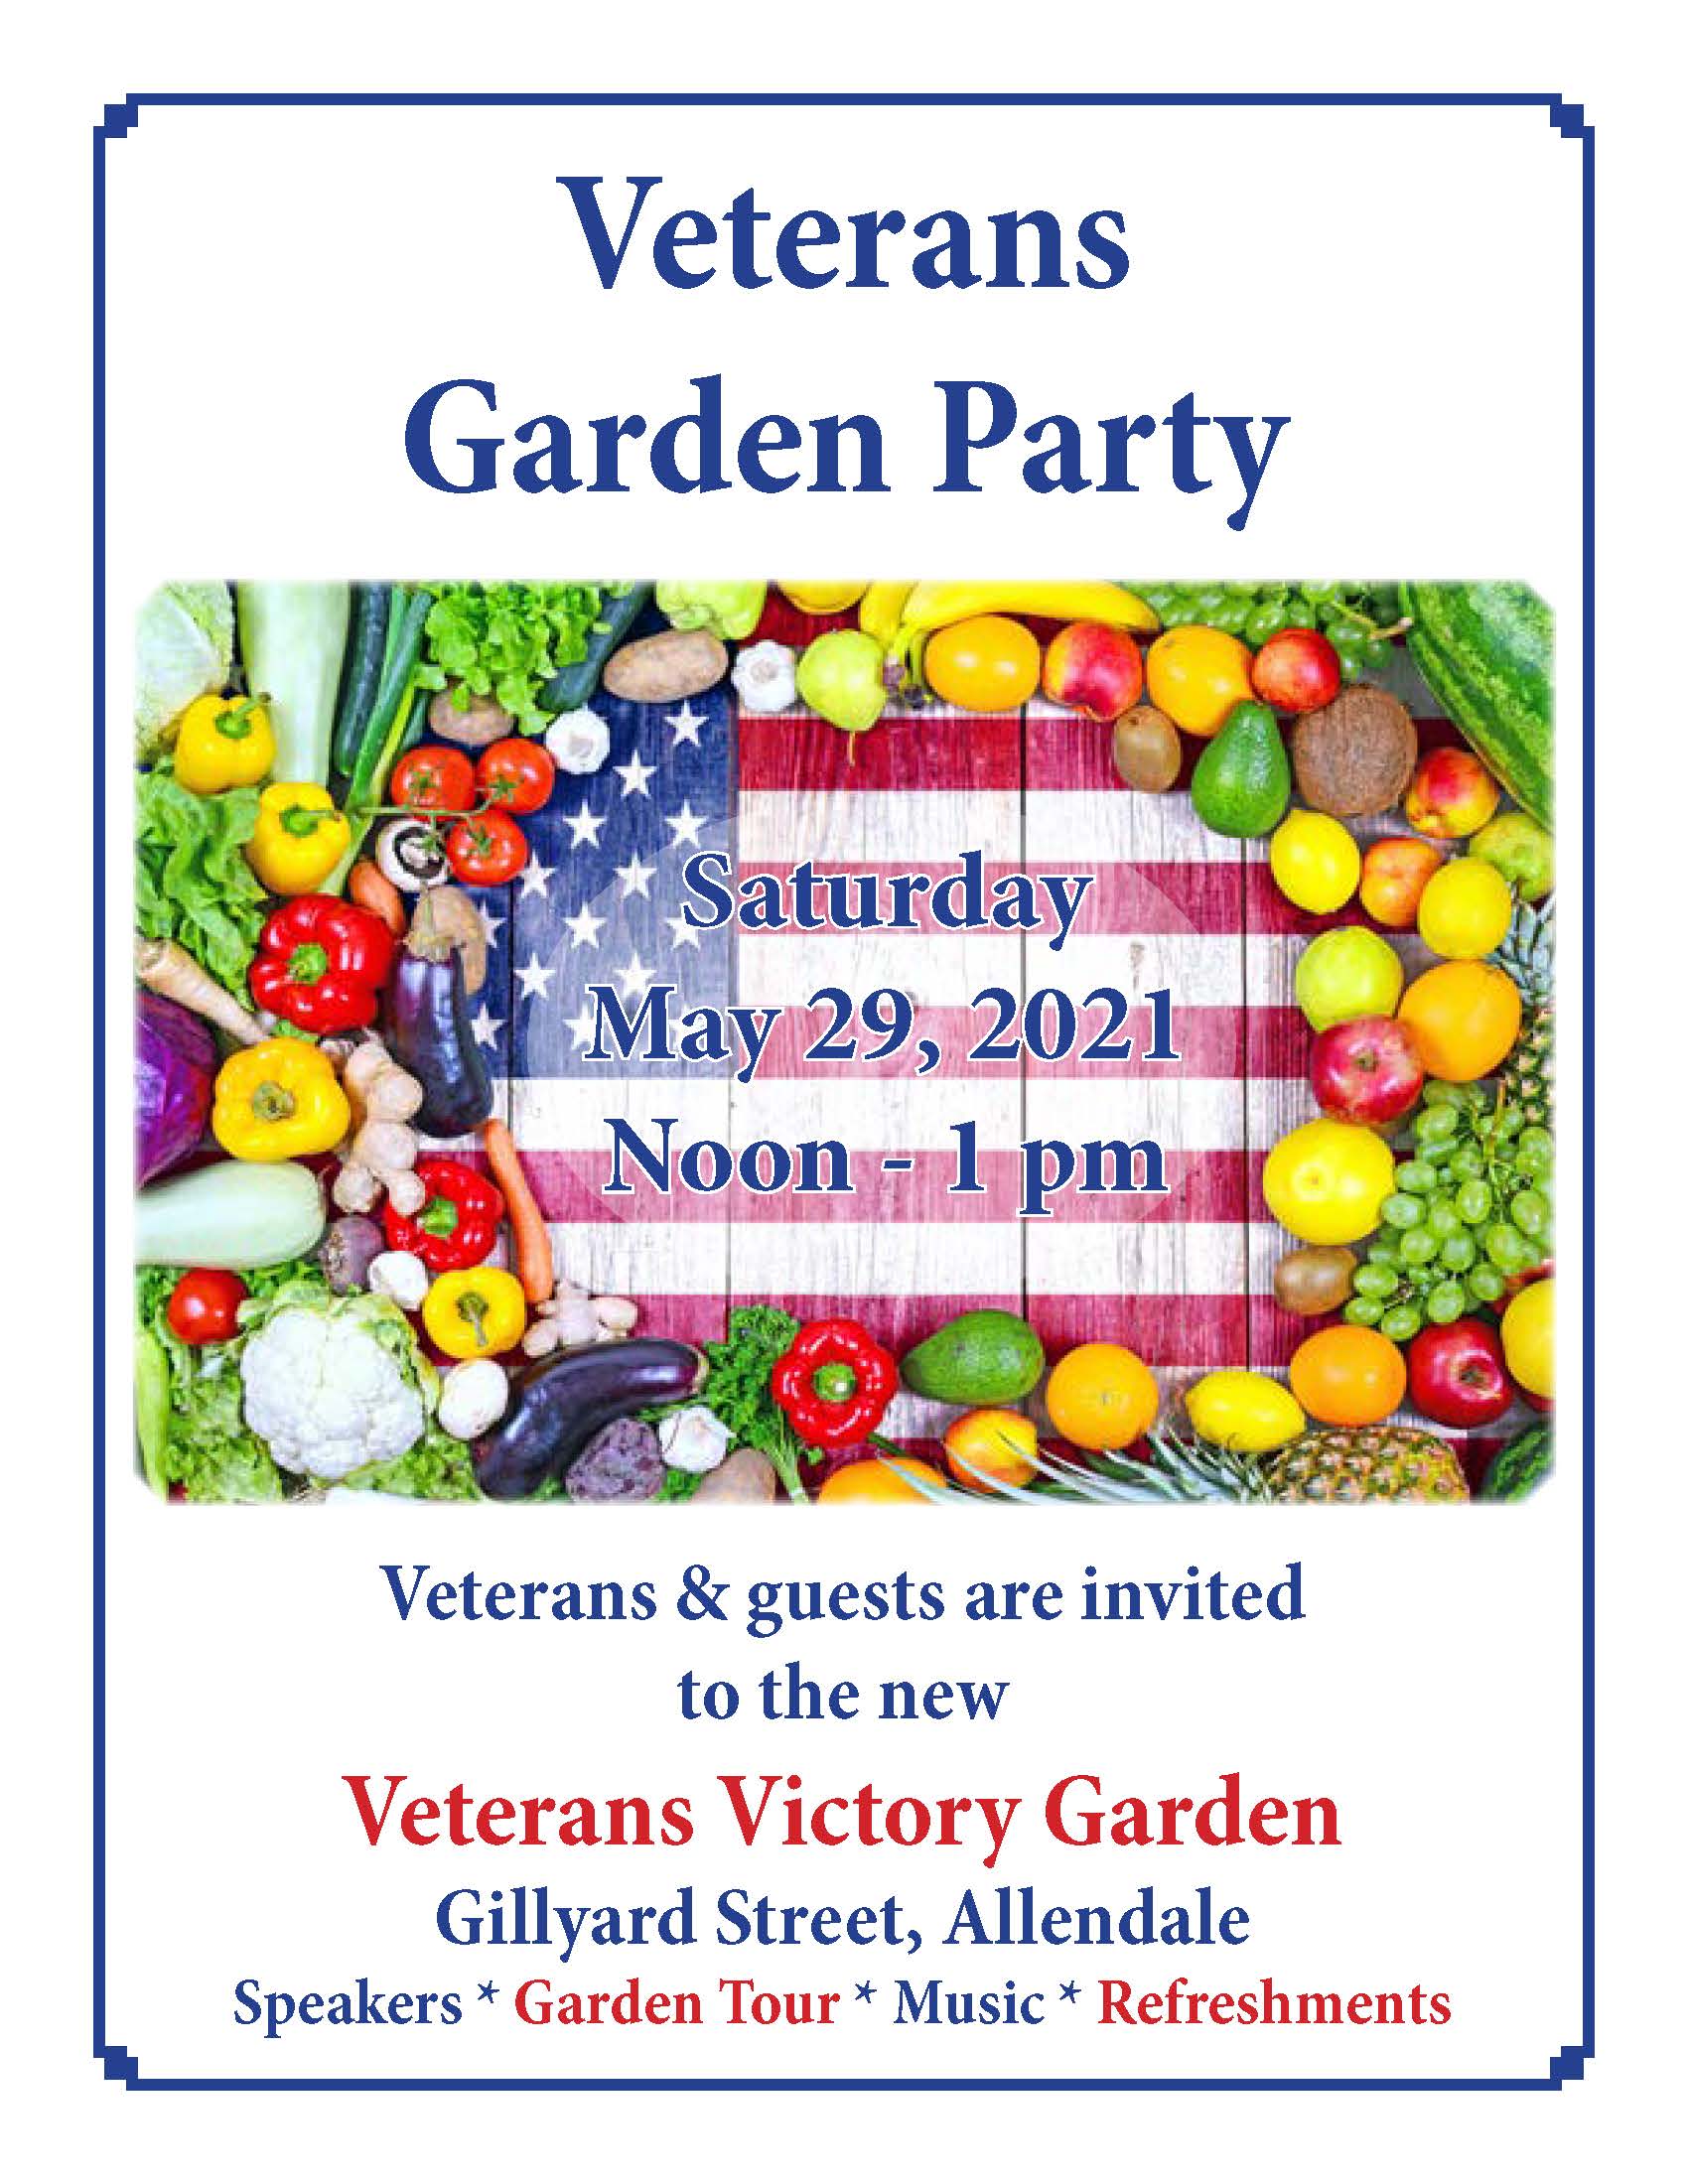 Allendale Veterans Garden Party